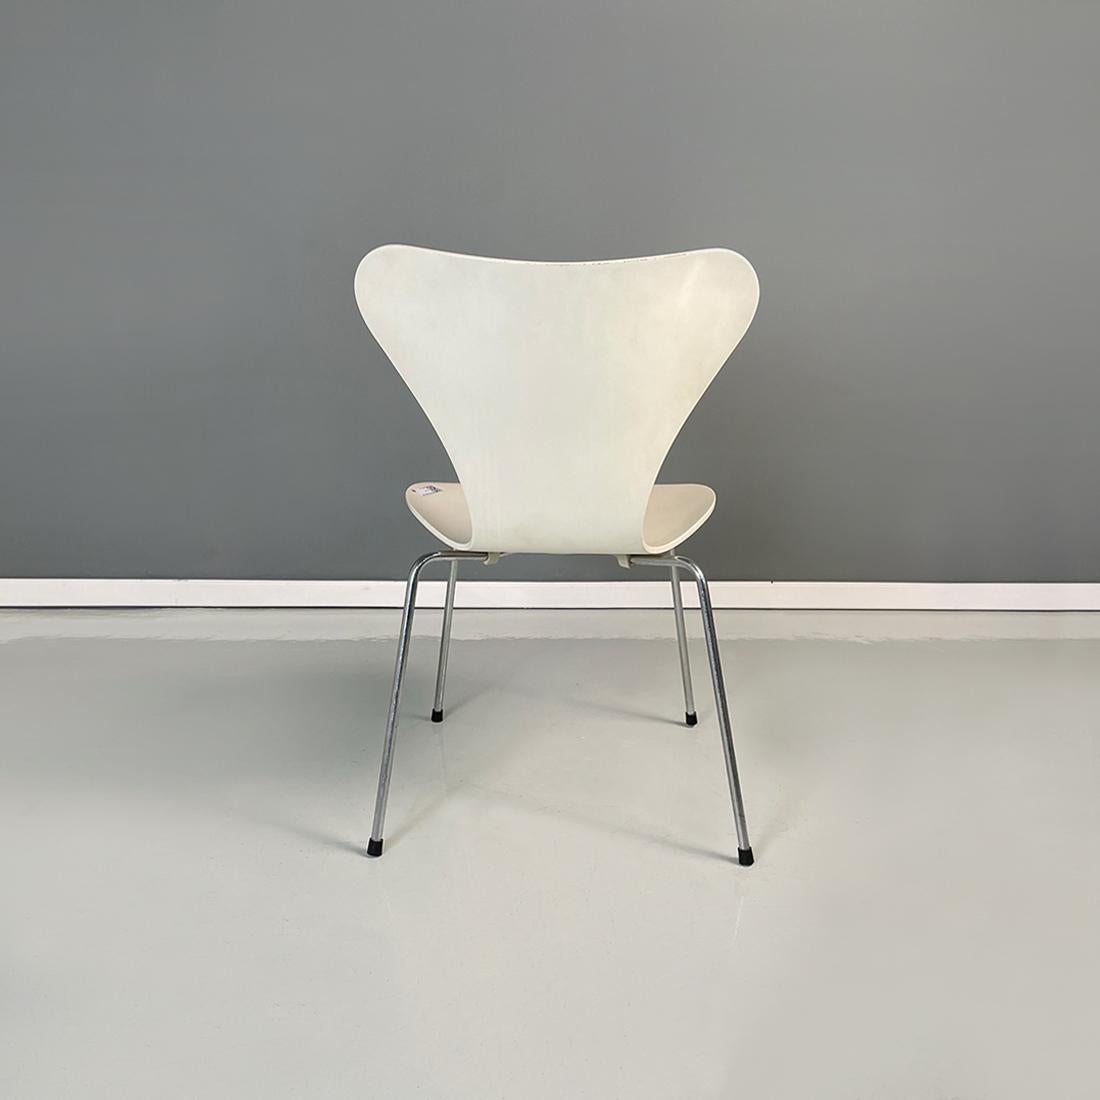 Danish Modern White Chairs of Series 7 by Arne Jacobsen for Fritz Hansen, 1970s For Sale 6